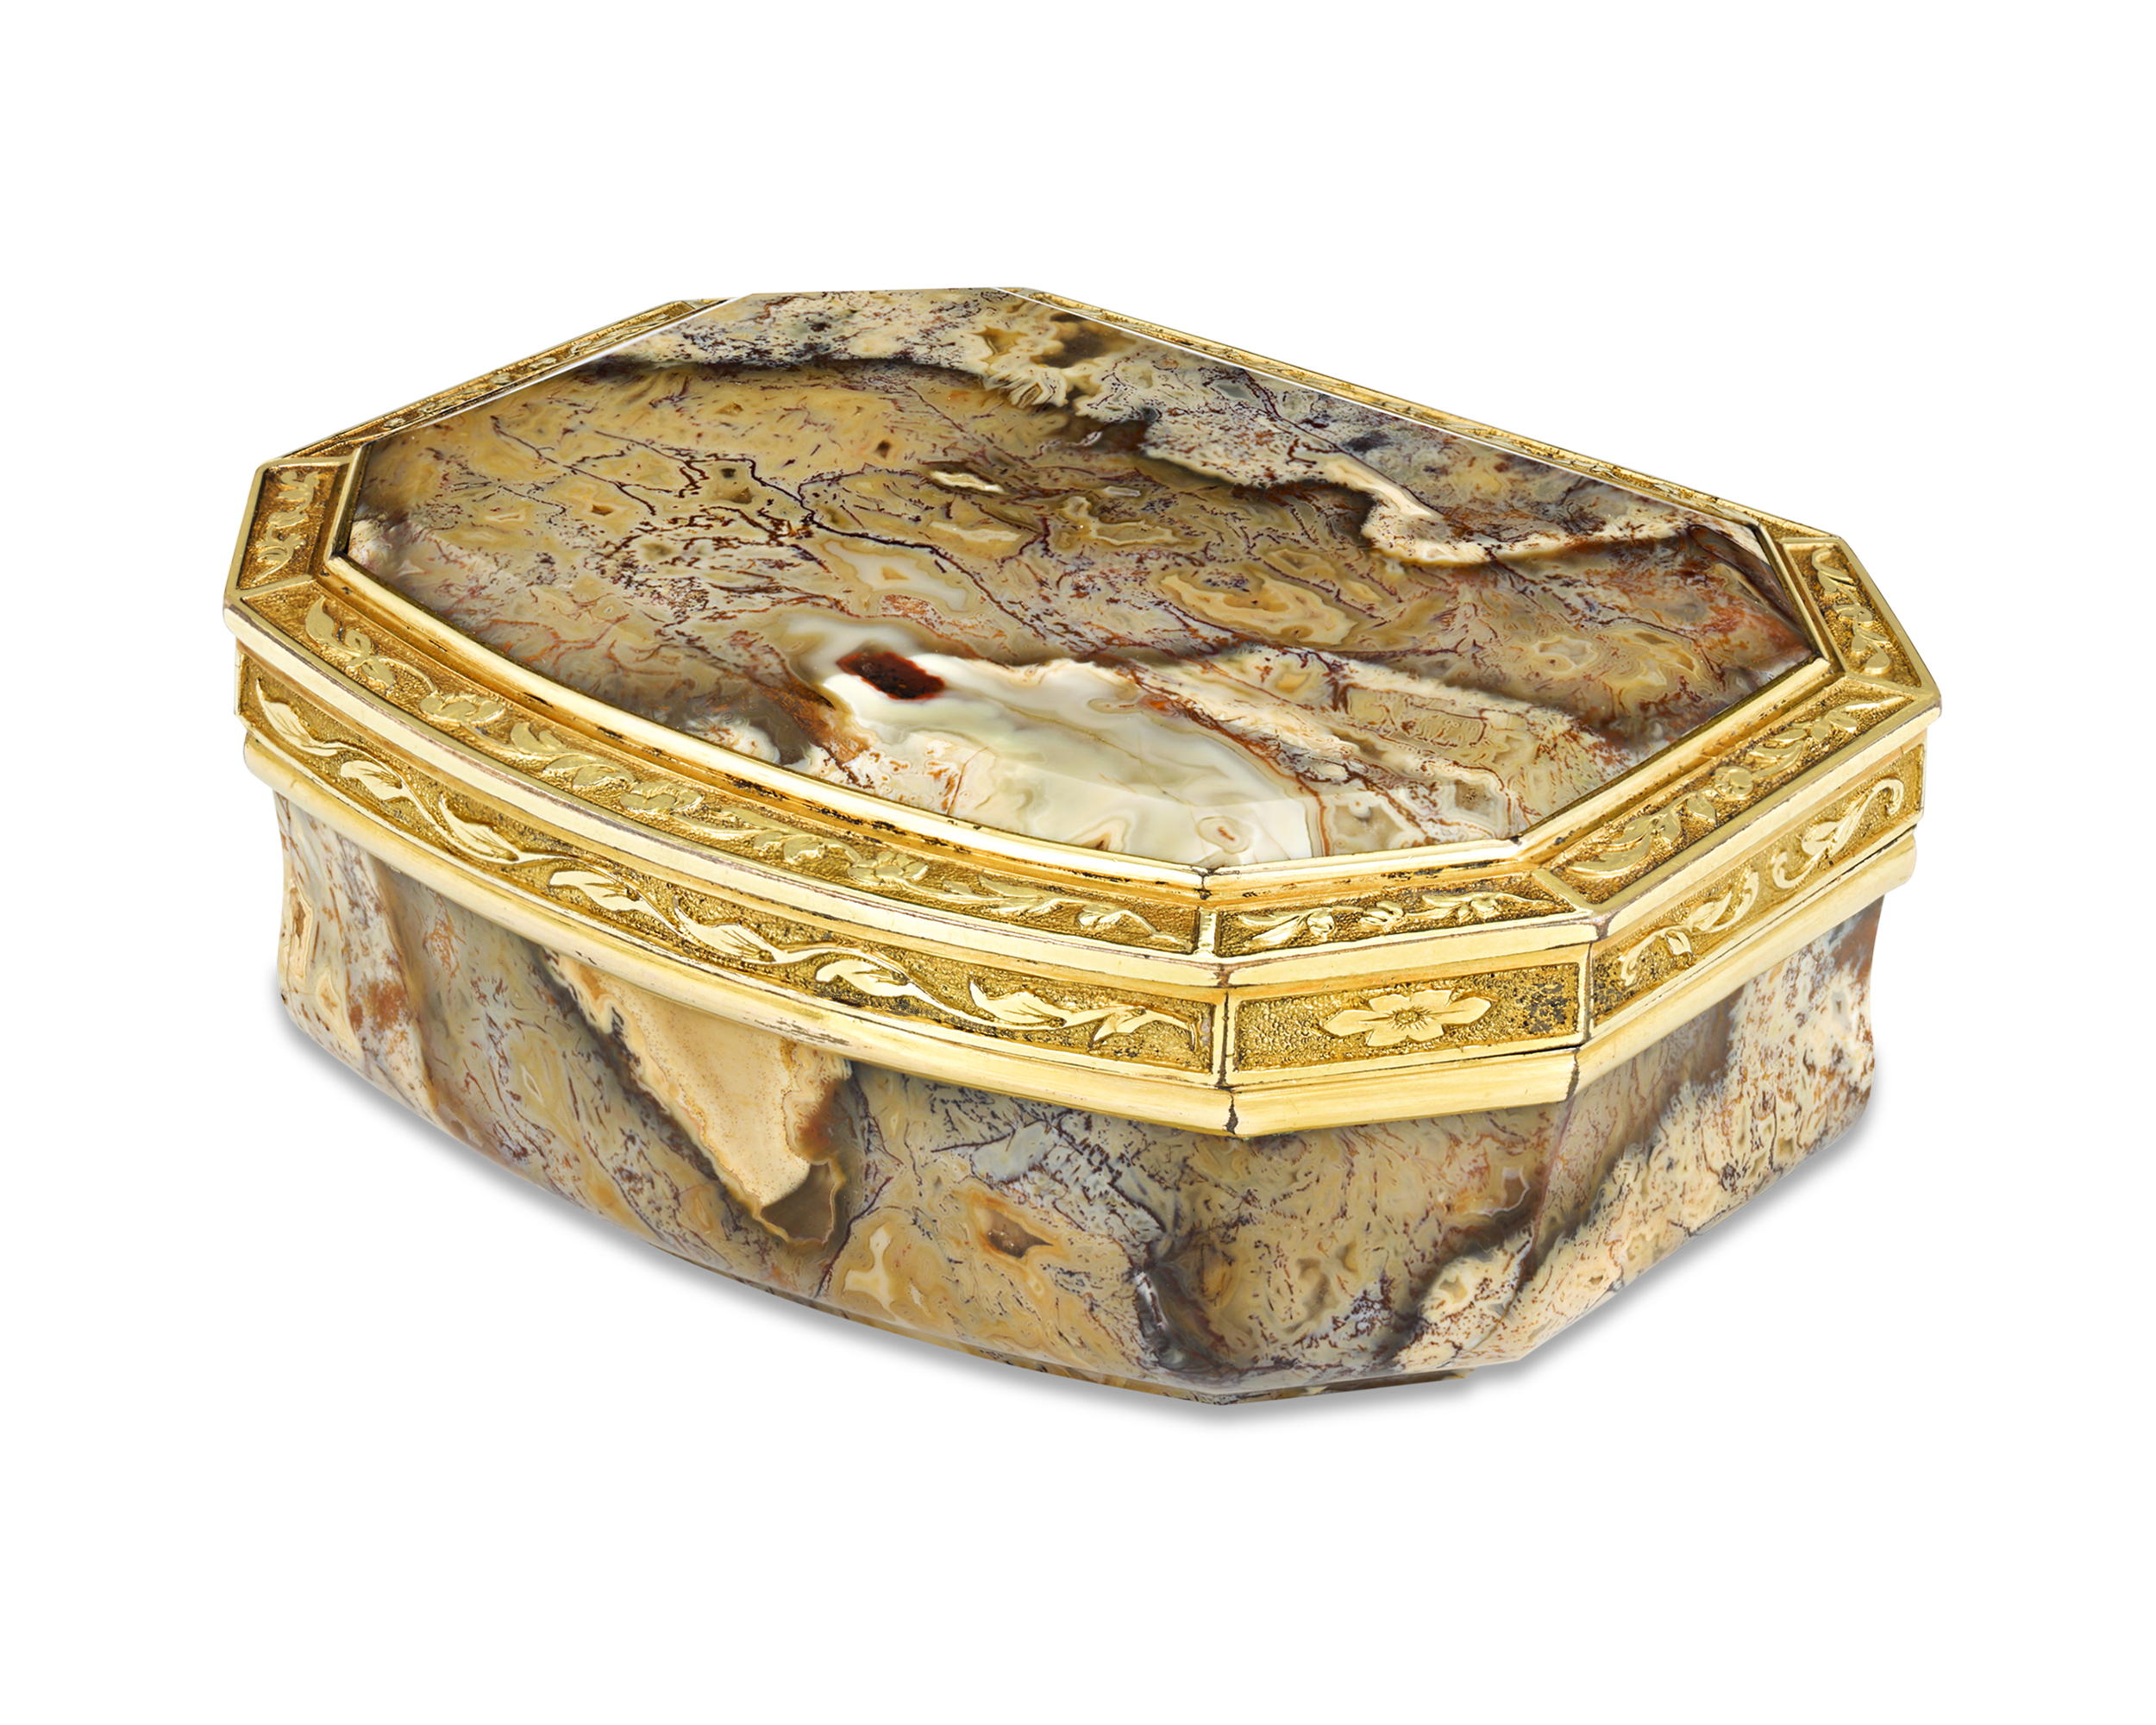 18th-Century English Agate Snuff Box